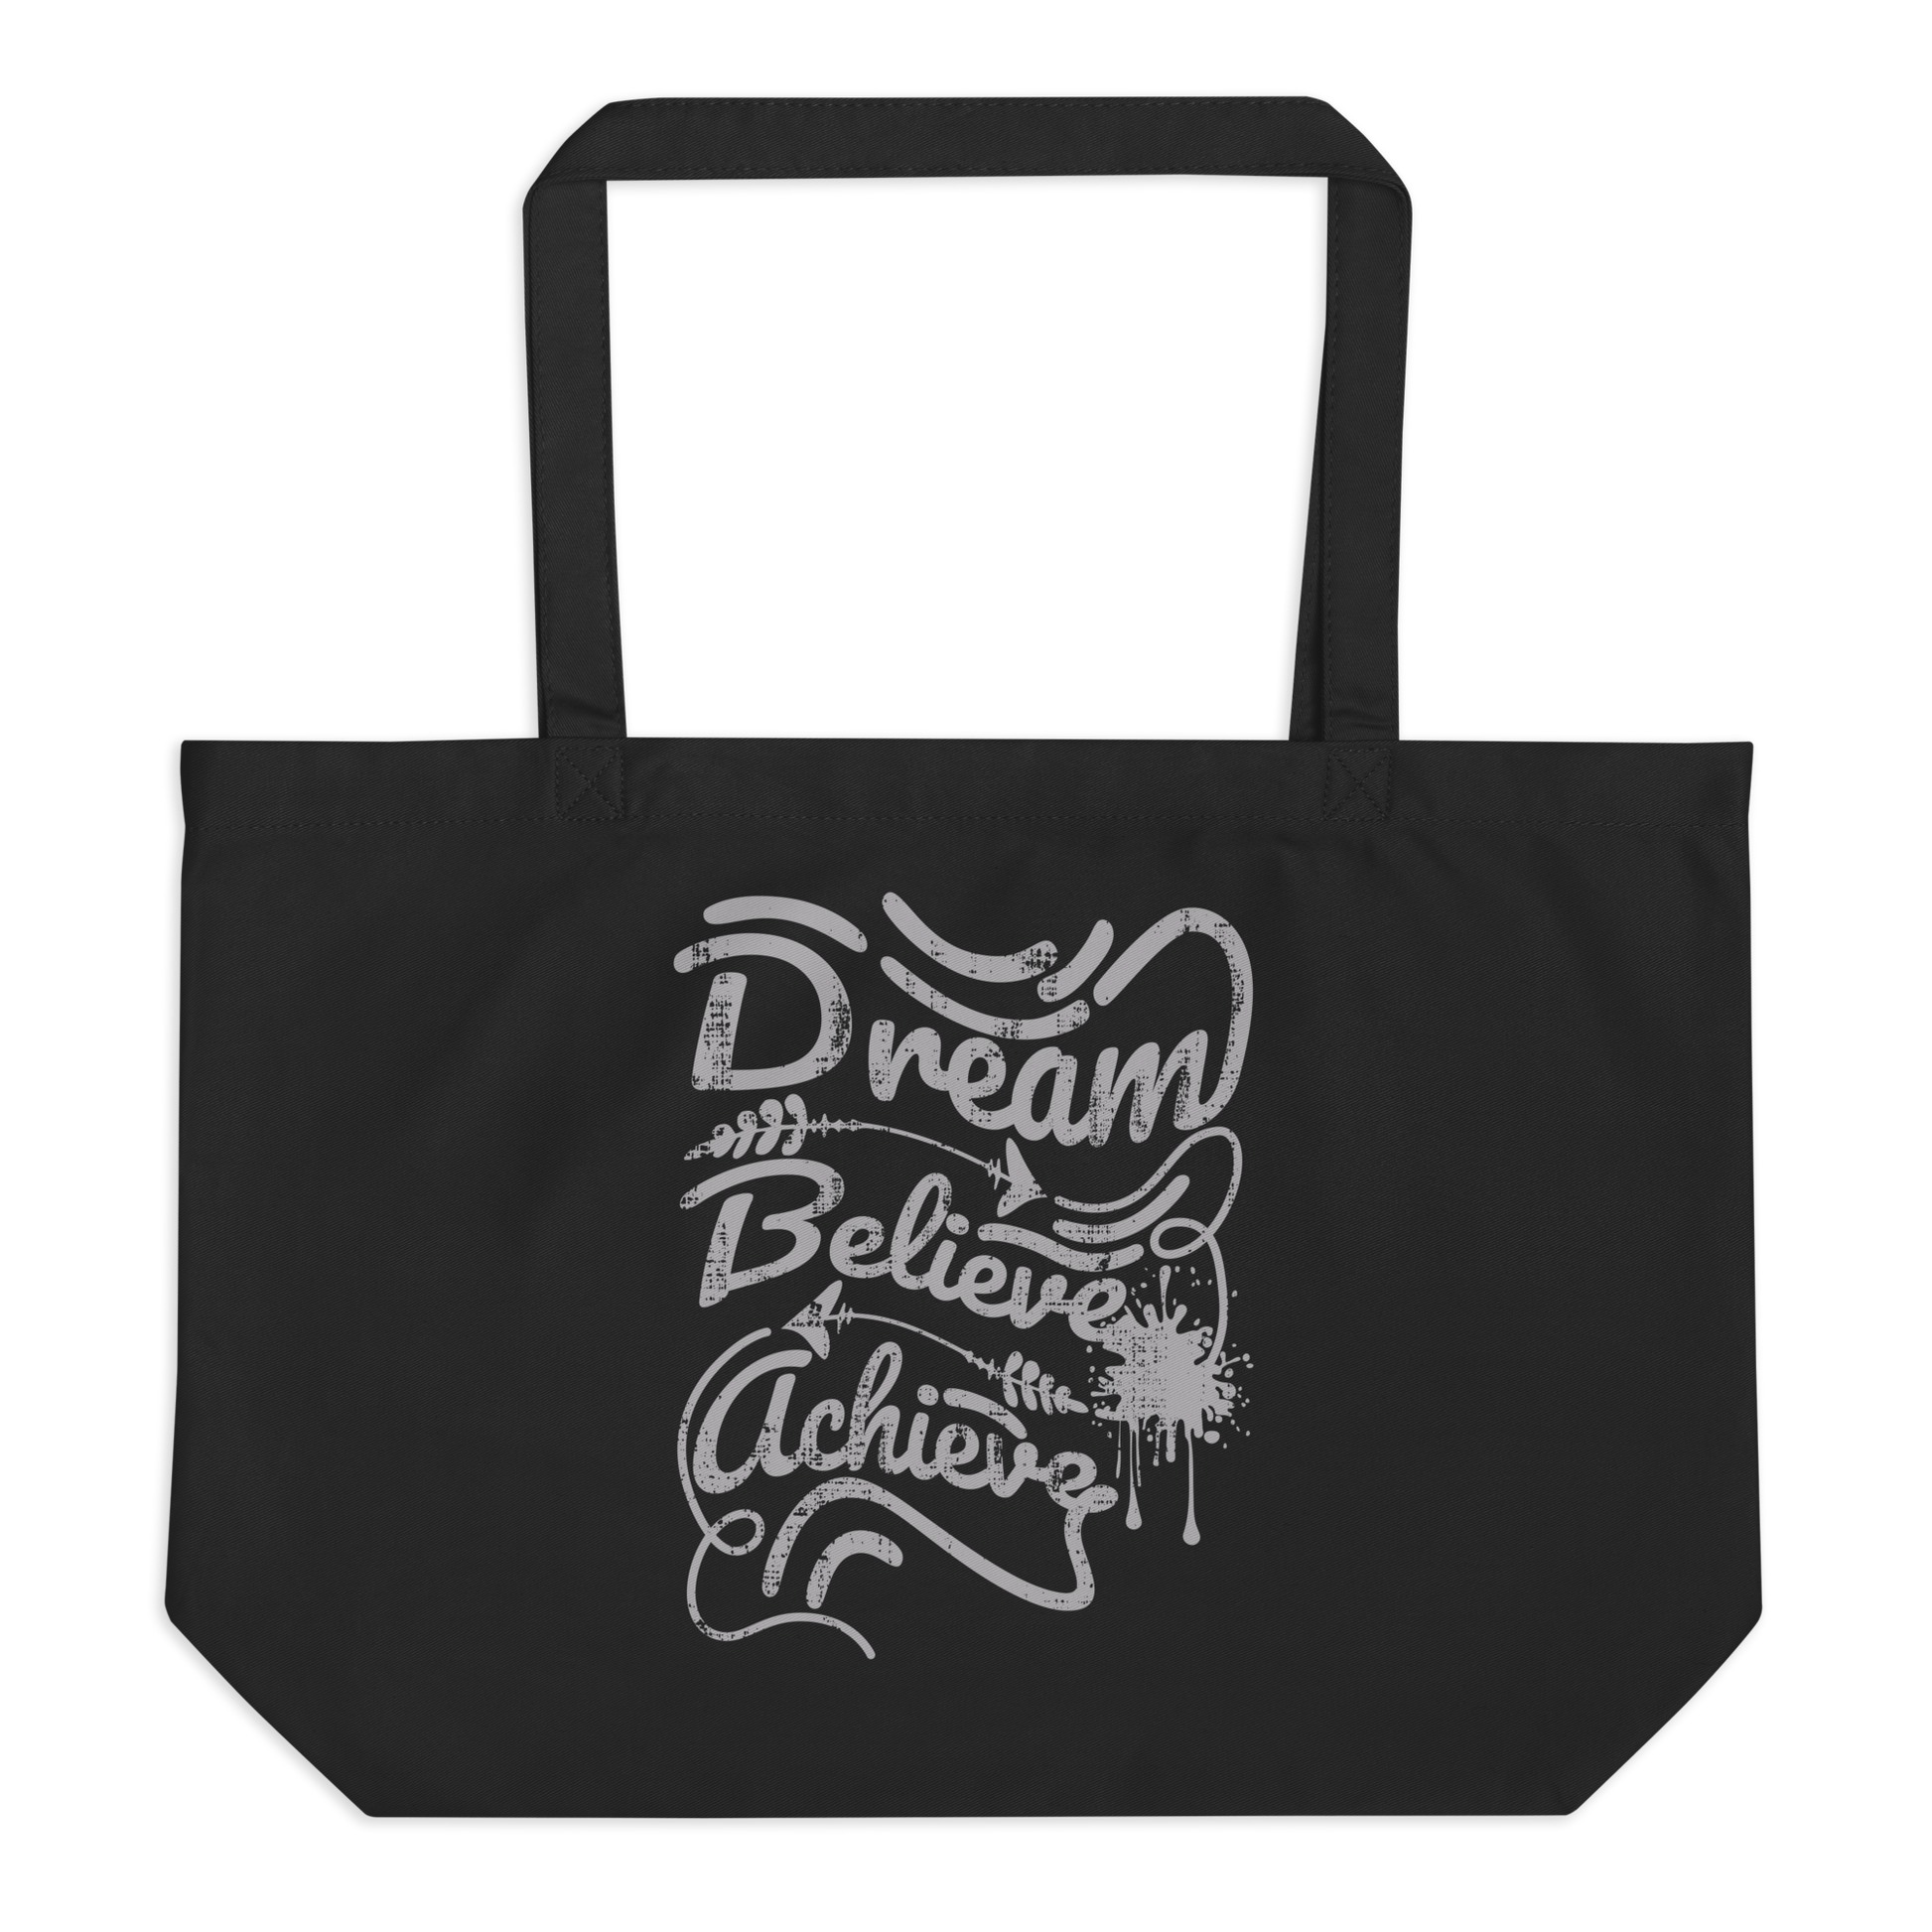 Retro Tote Bag - Dream Believe Achieve - Large Size Black